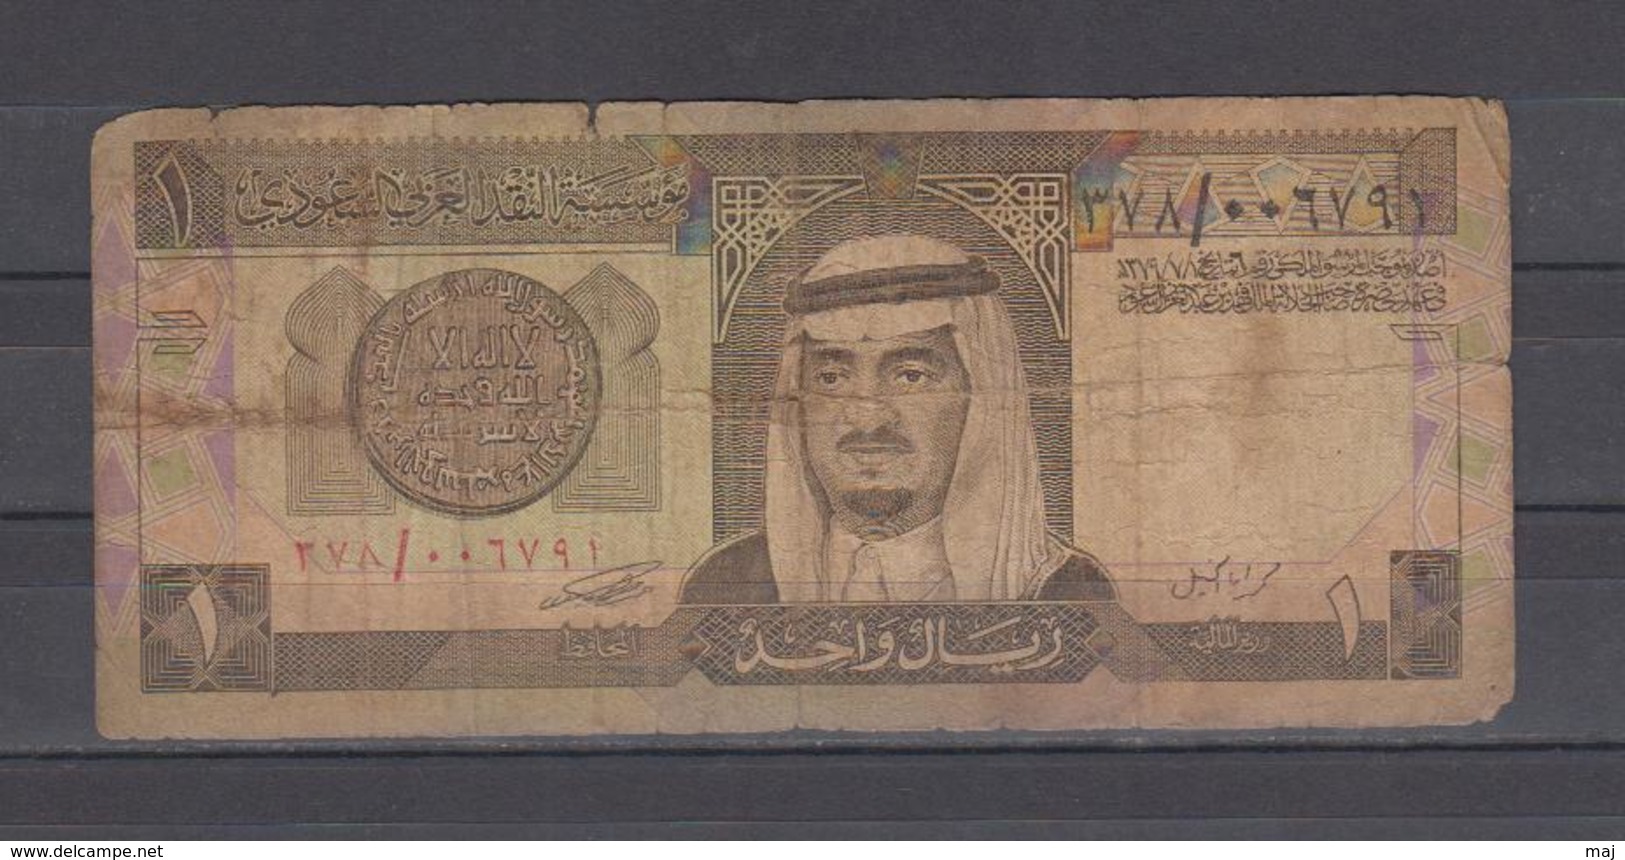 SAUDI ARABIAN MONETARY AGENCY - ONE RIYAL BANK NOTE, As Is Condition - Arabie Saoudite